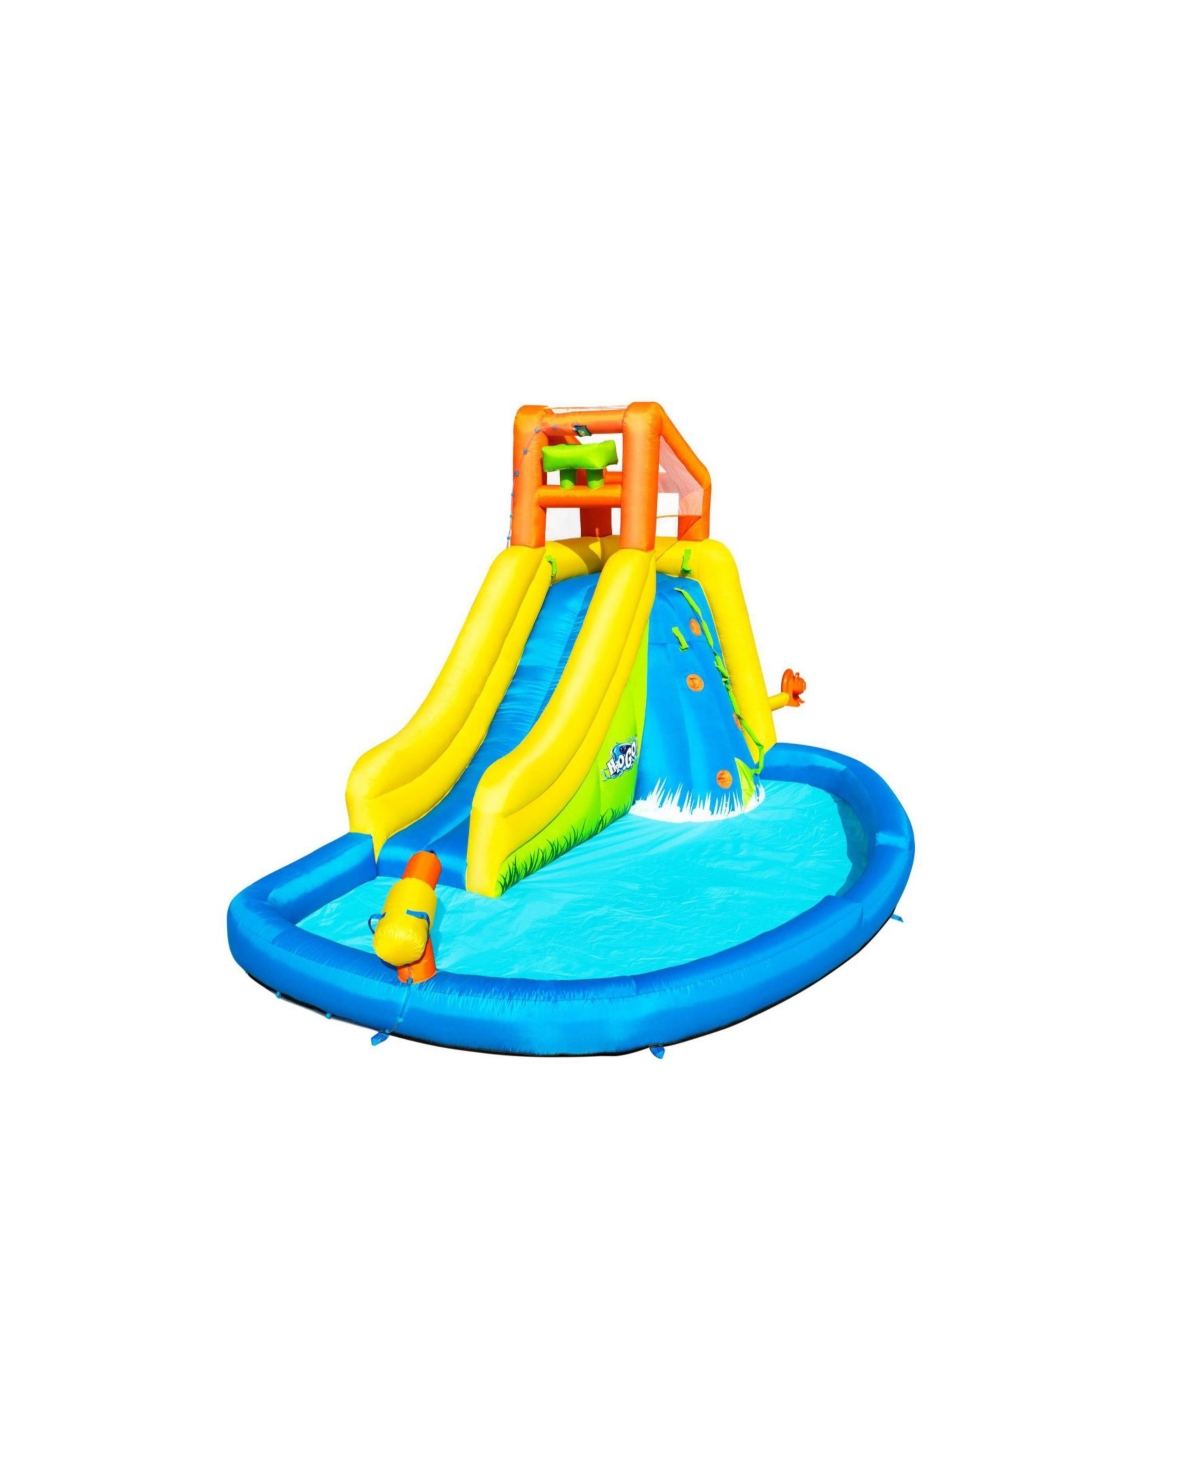 Bestway H2OGO Mount Splash more Kids Inflatable Water Park